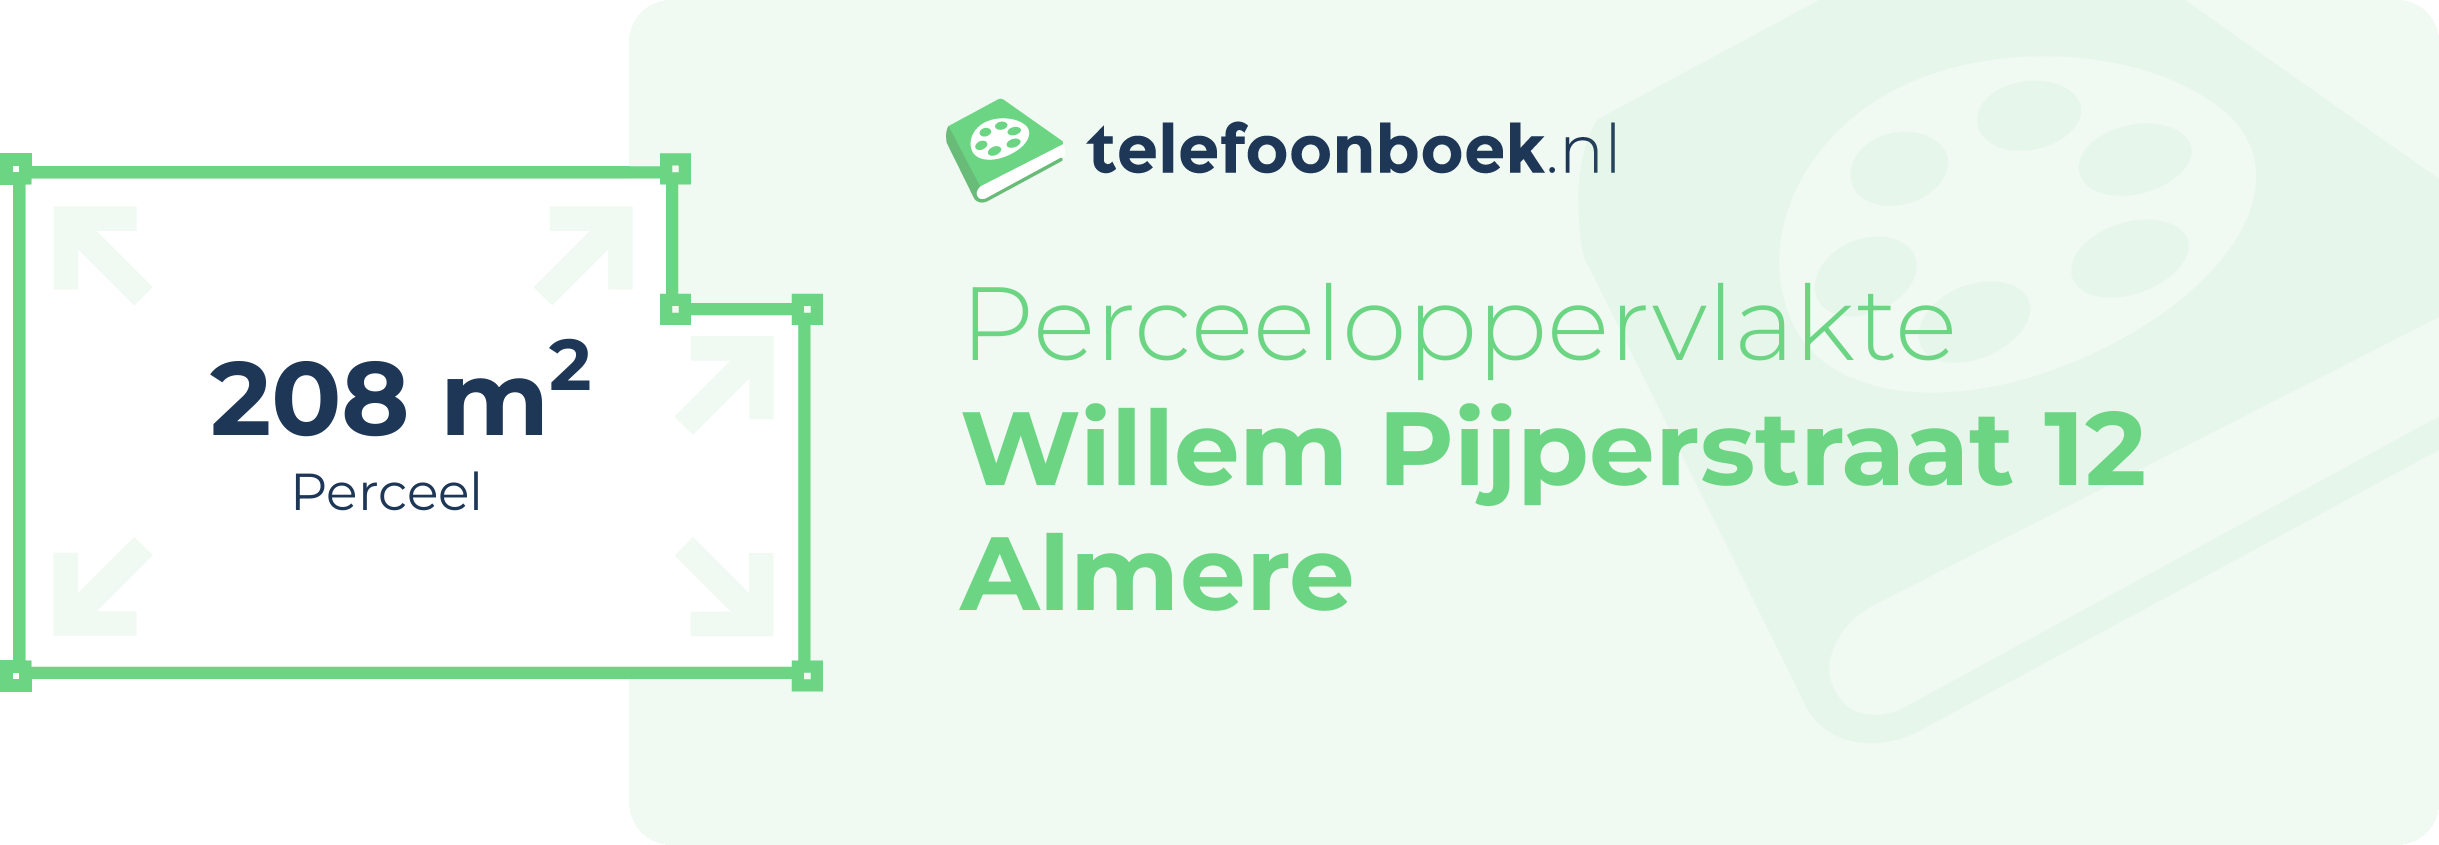 Perceeloppervlakte Willem Pijperstraat 12 Almere